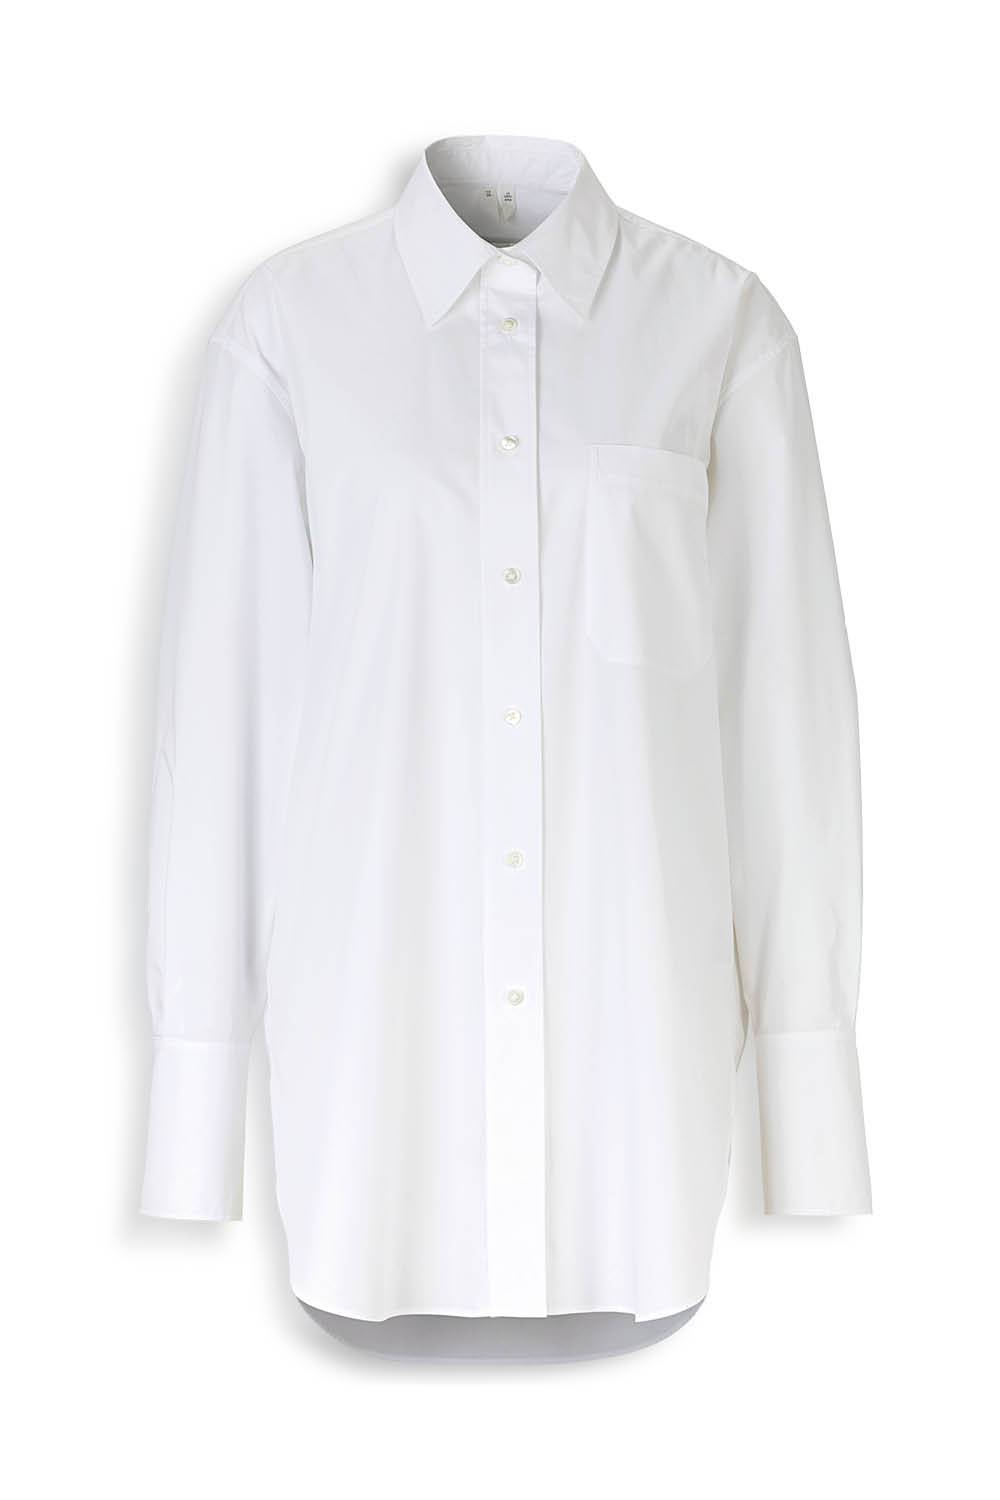 Camisa blanca entallada